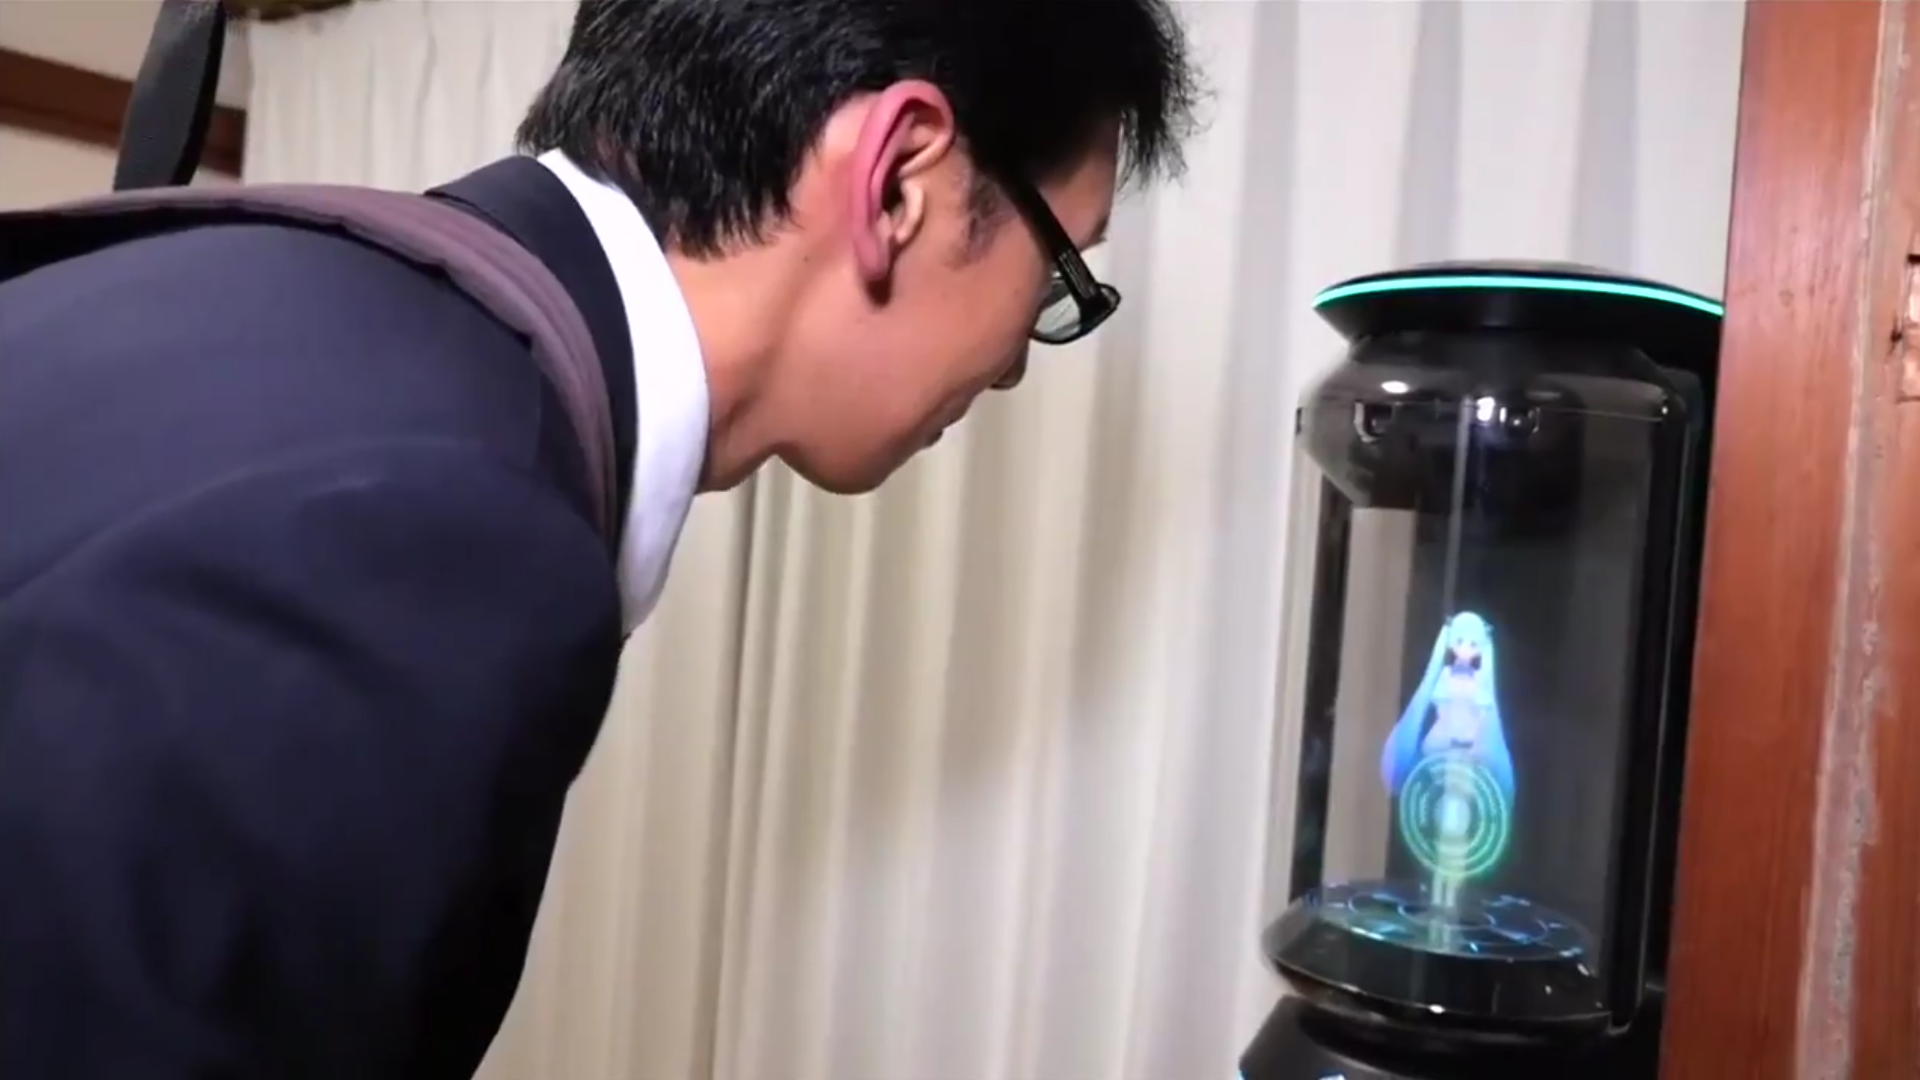 japanese man marries virtual character (Reuters)